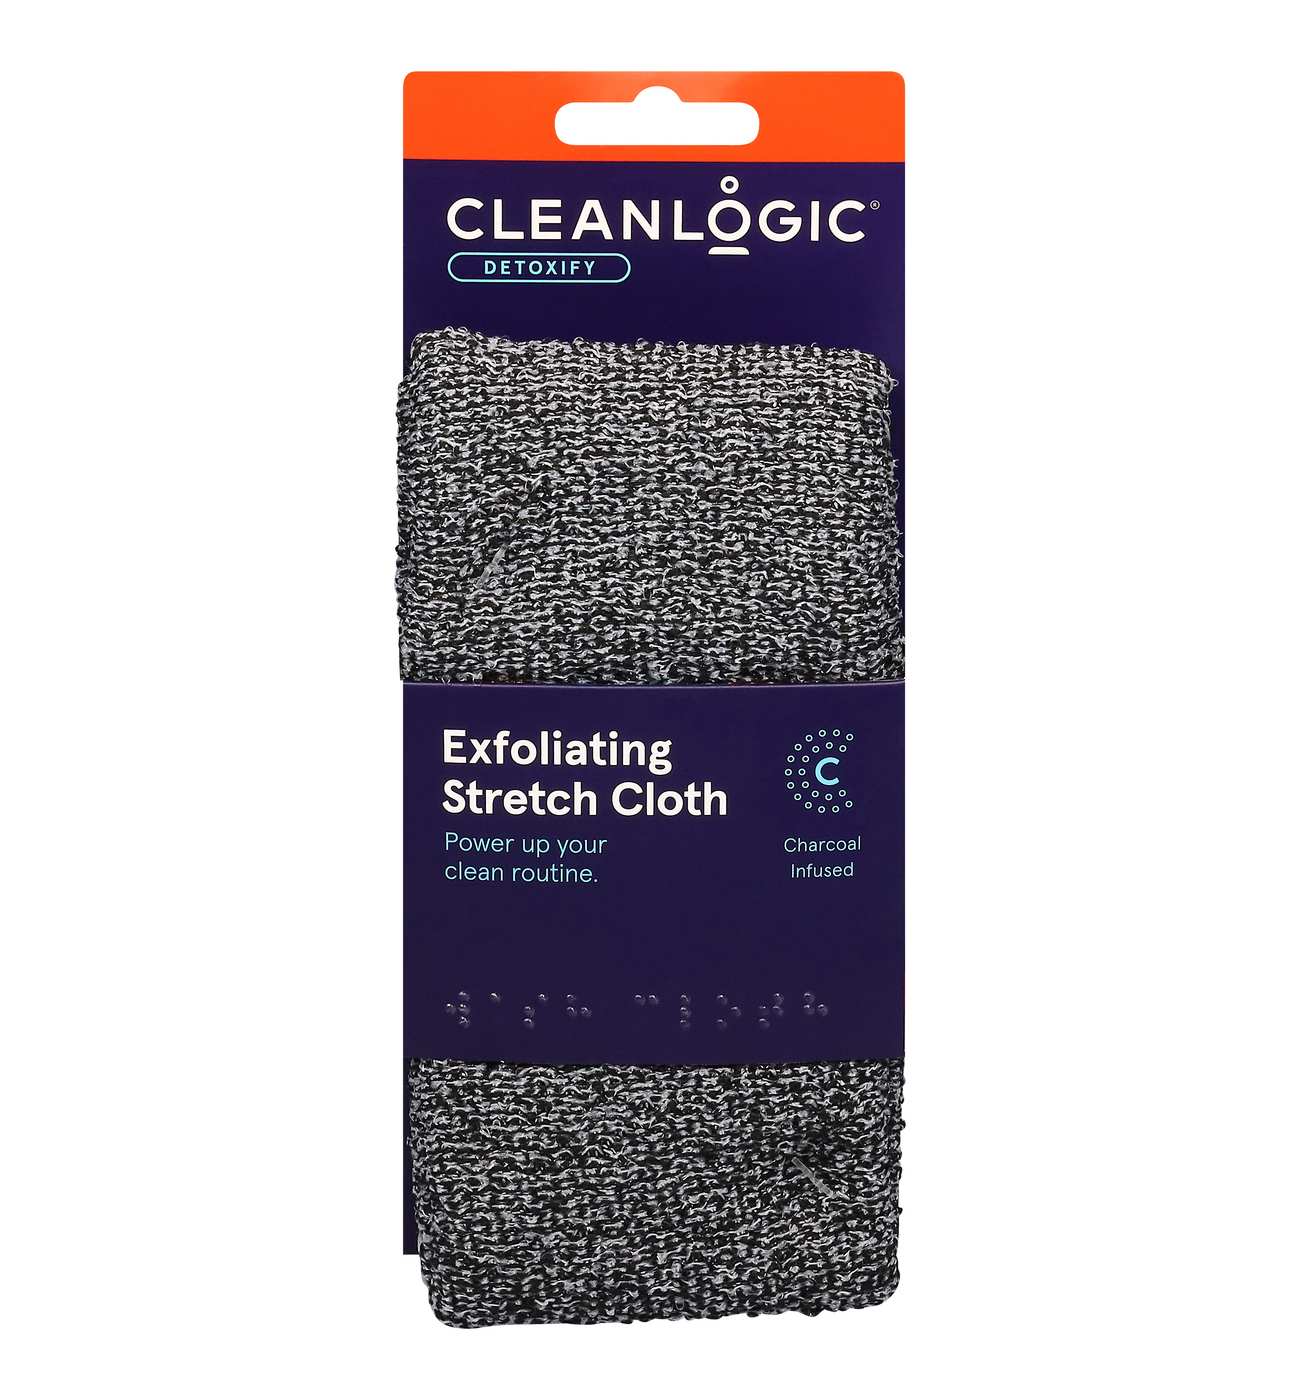 Cleanlogic Detoxify Exfoliating Stretch Cloth; image 1 of 2